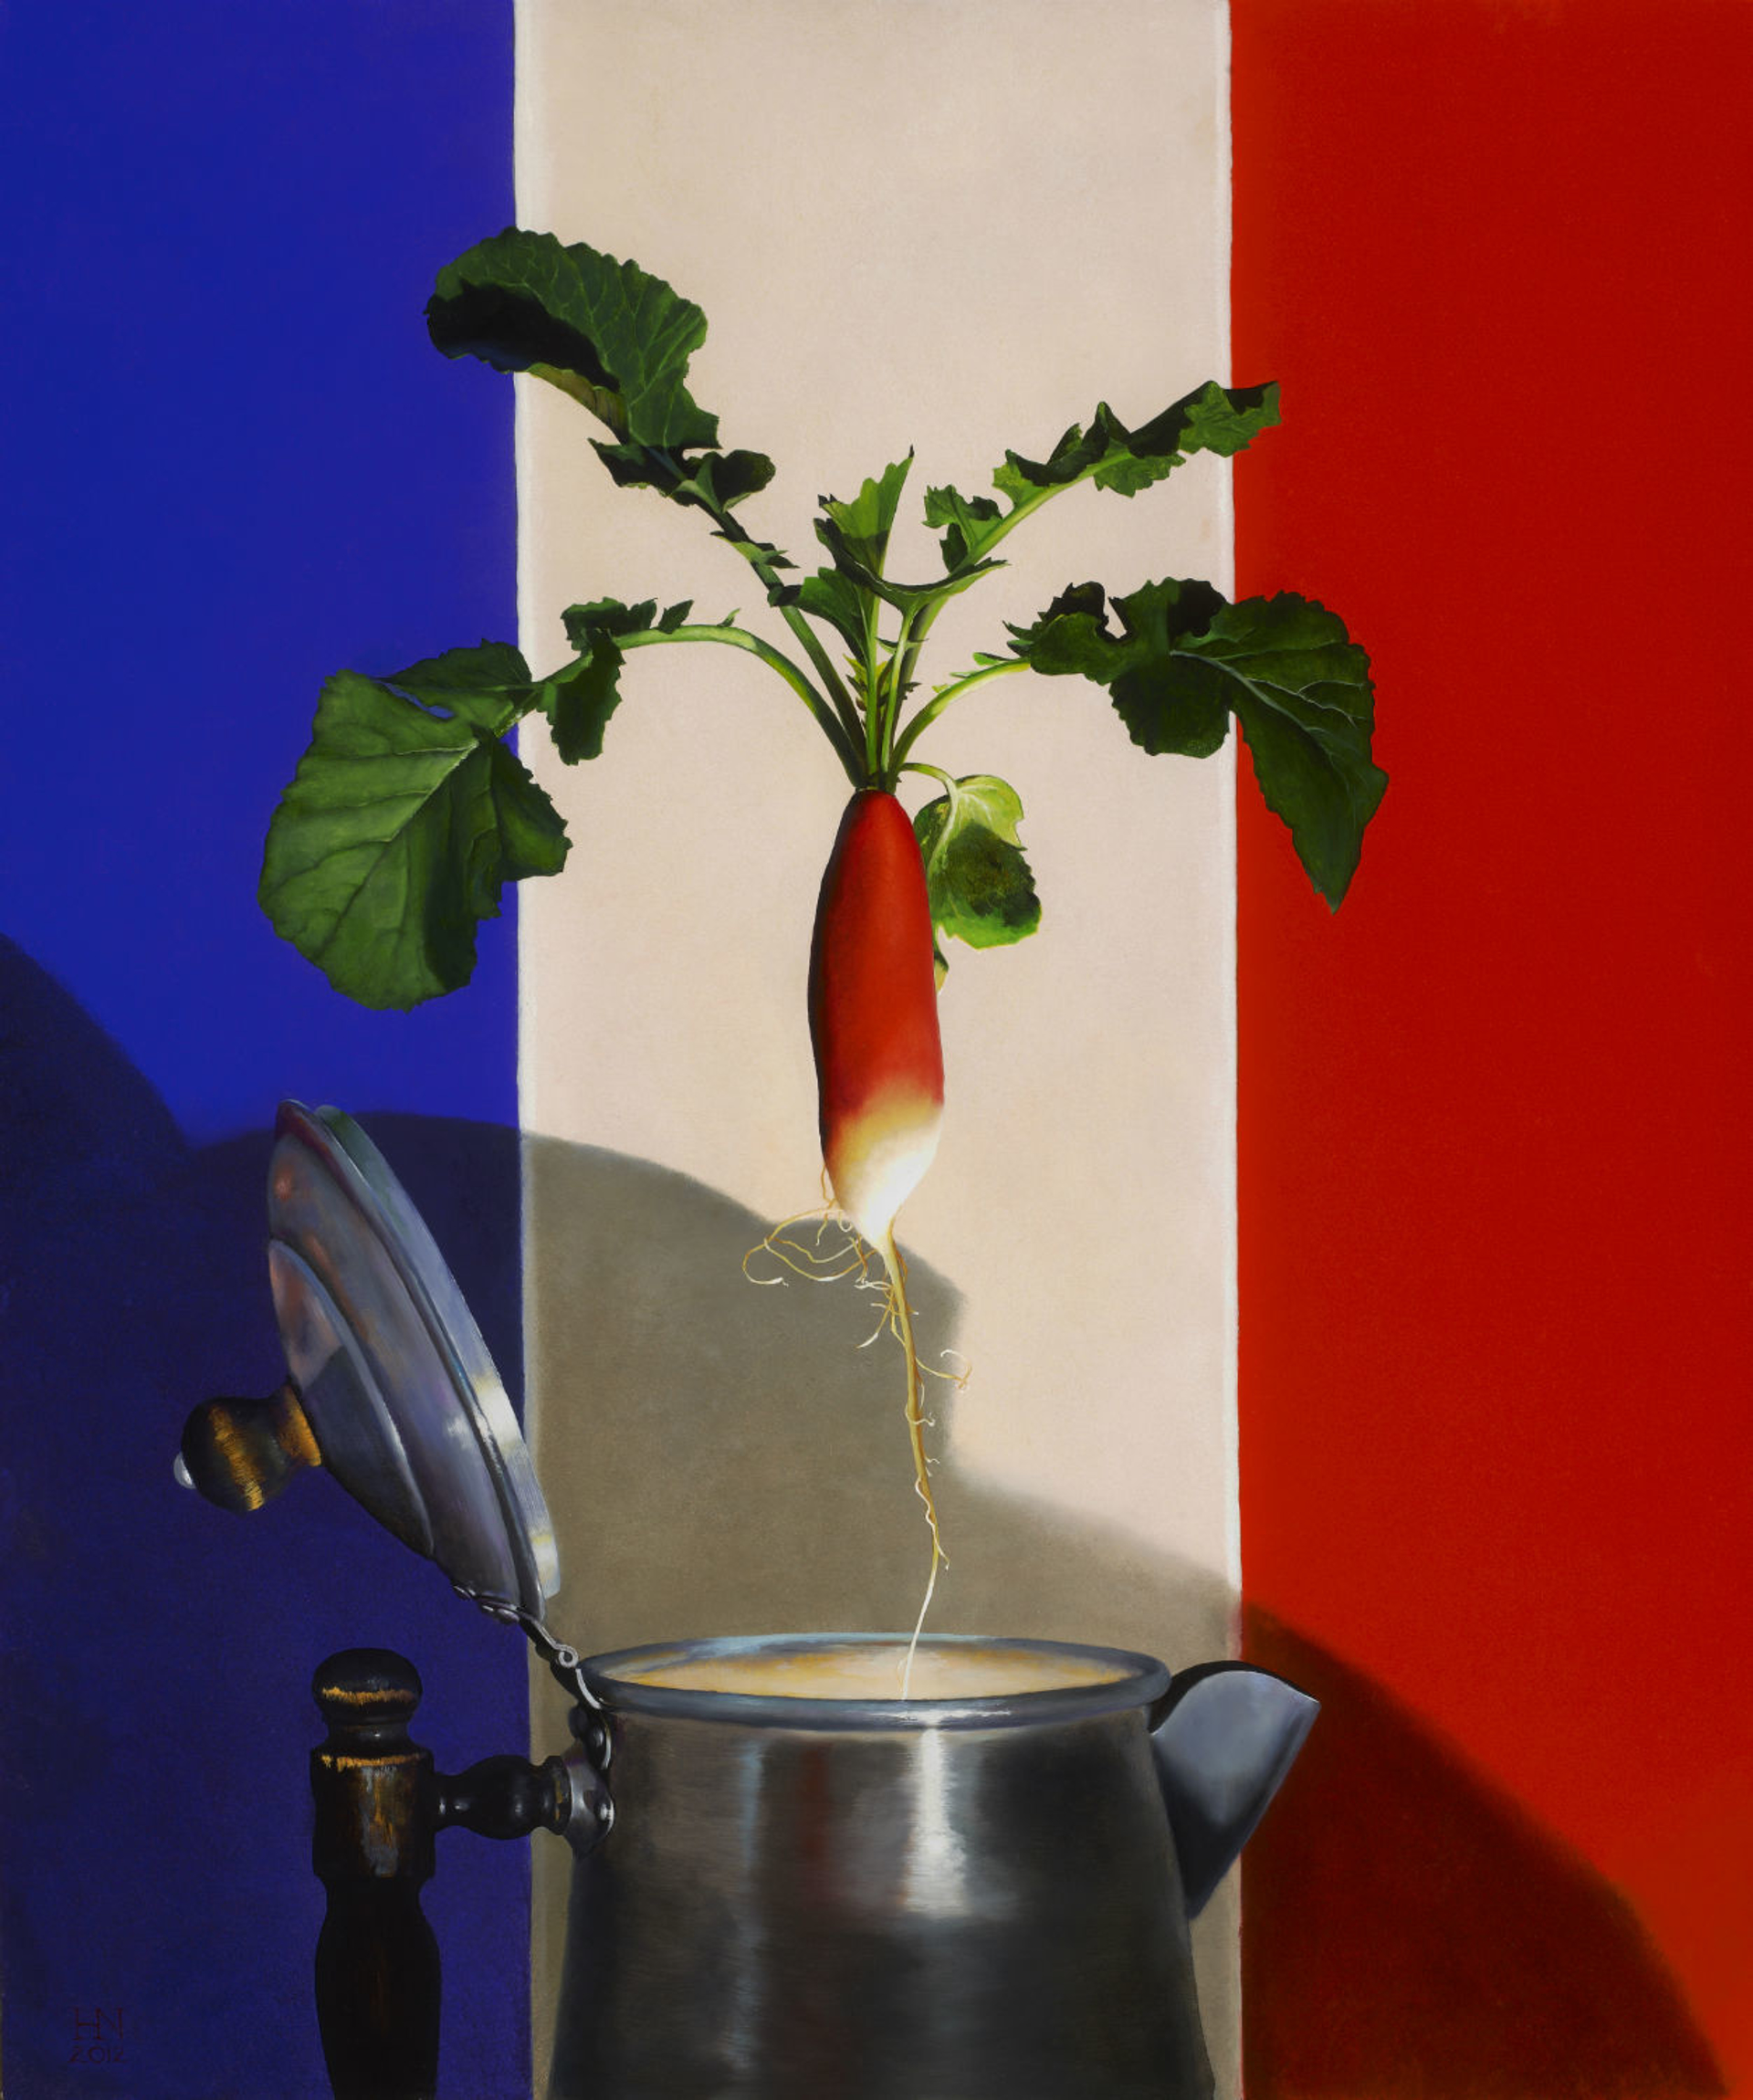 French Breakfast Radish by Heather Neill